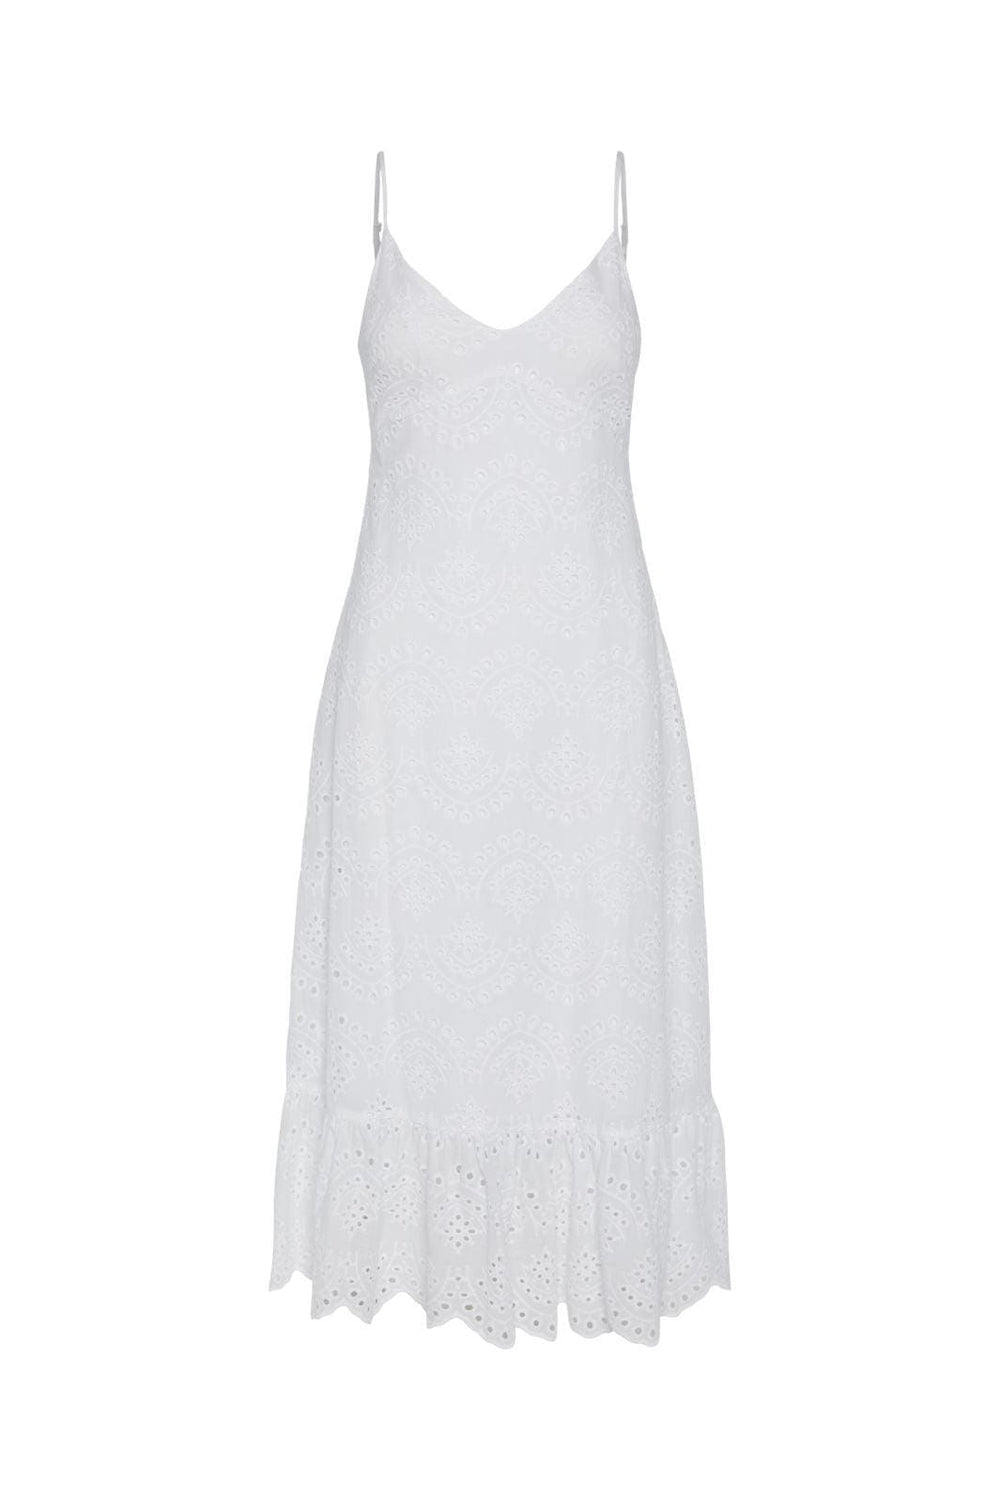 Pieces - Pcvilde Strap Dress - 4703759 Bright White